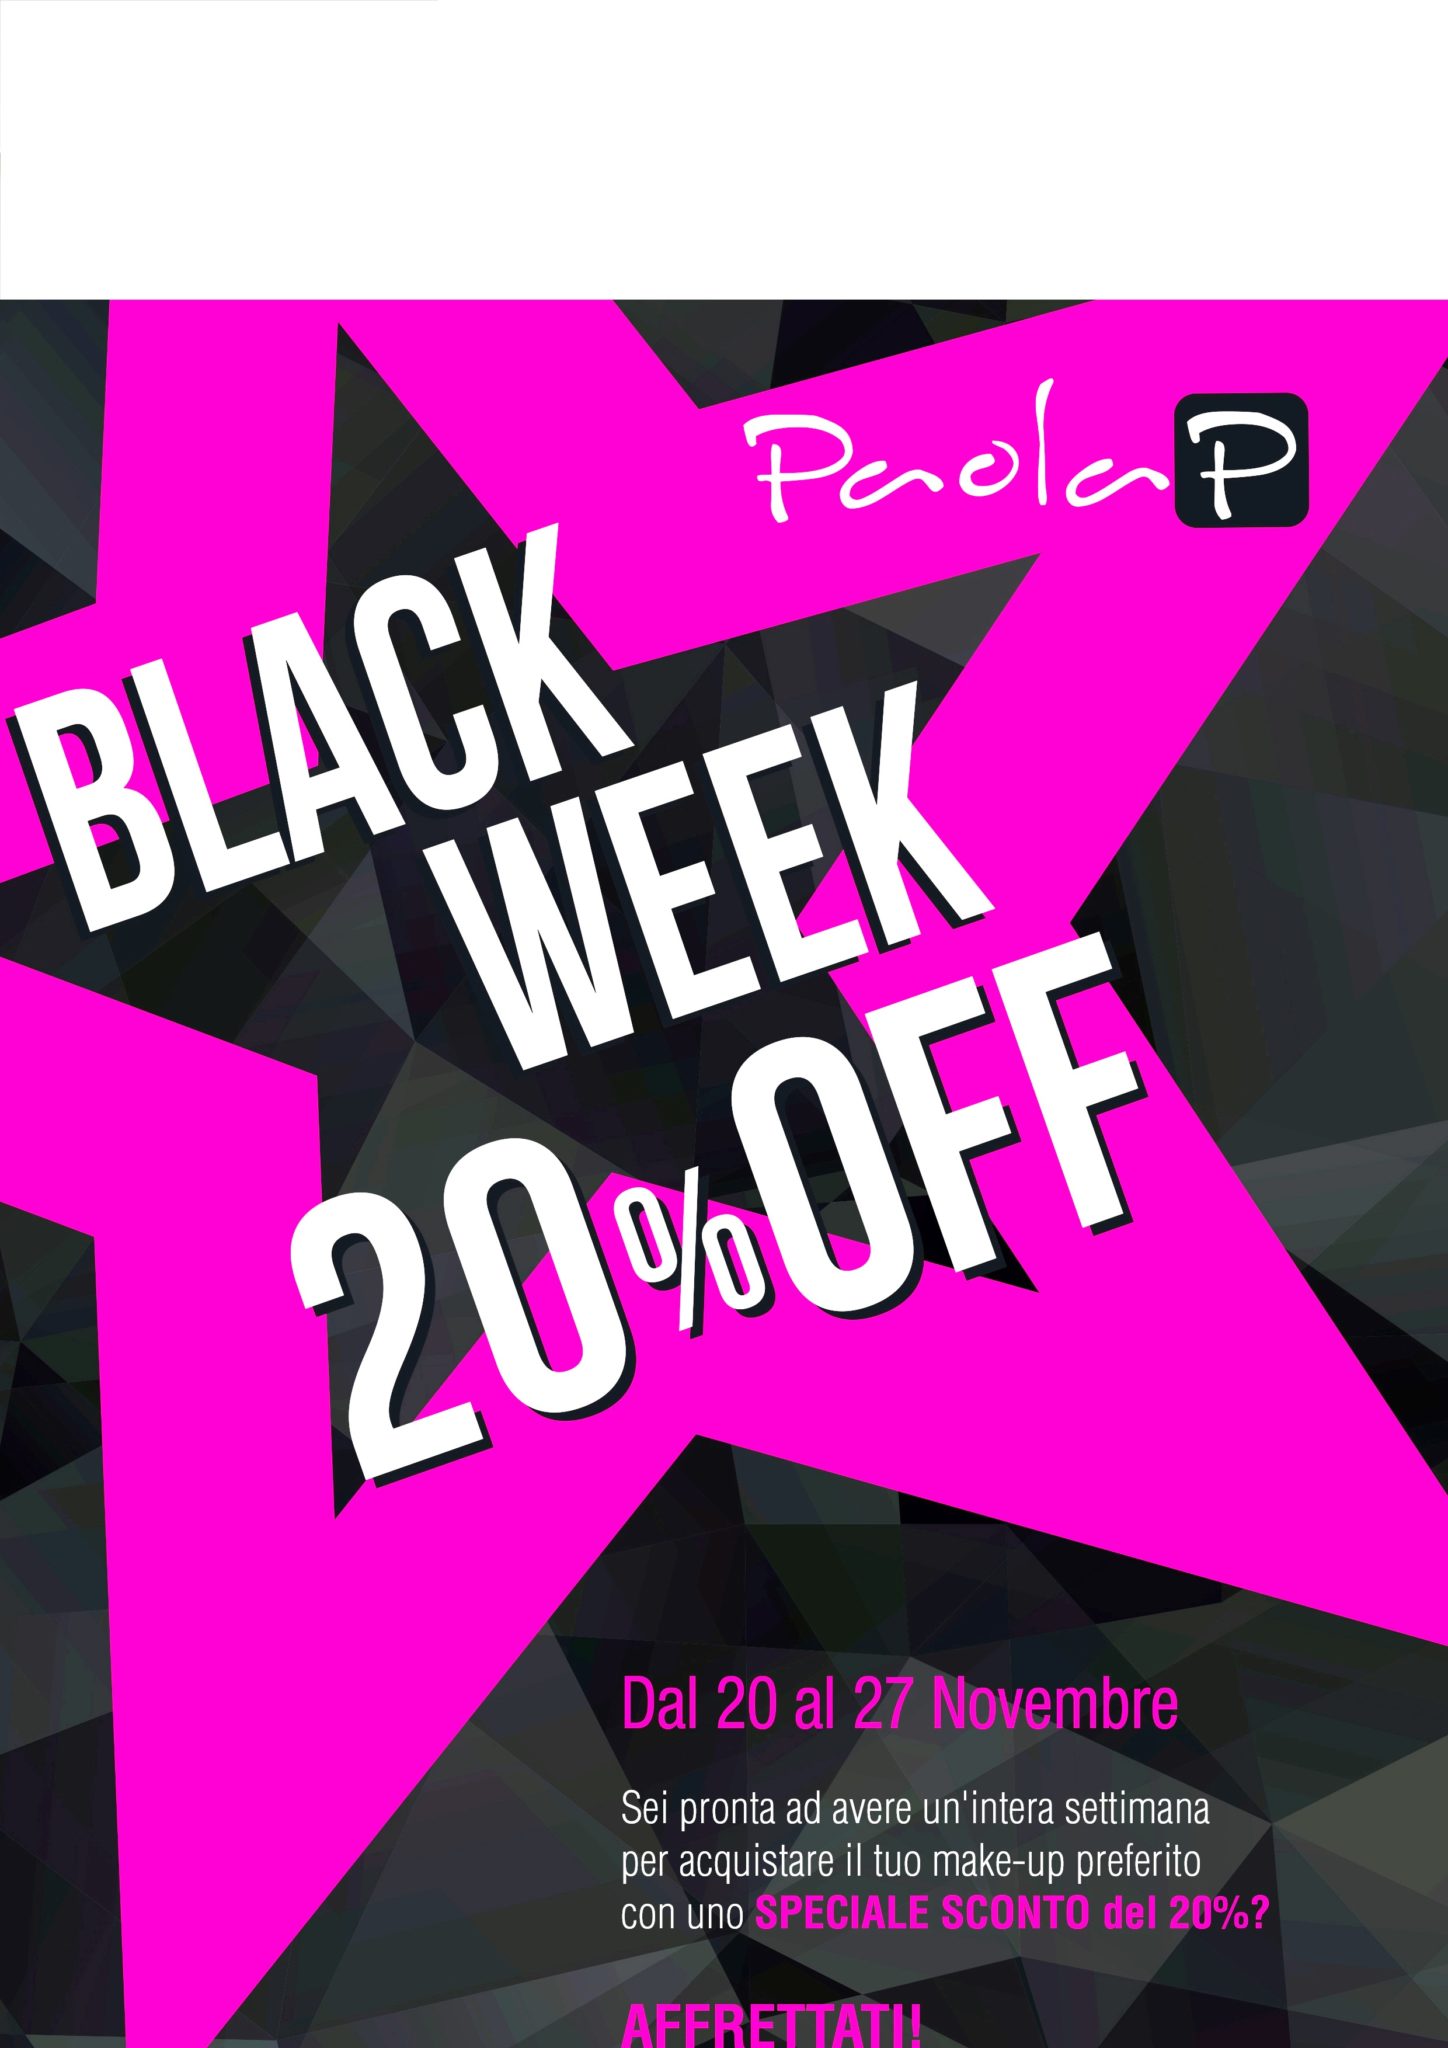 PaolaP Black Week